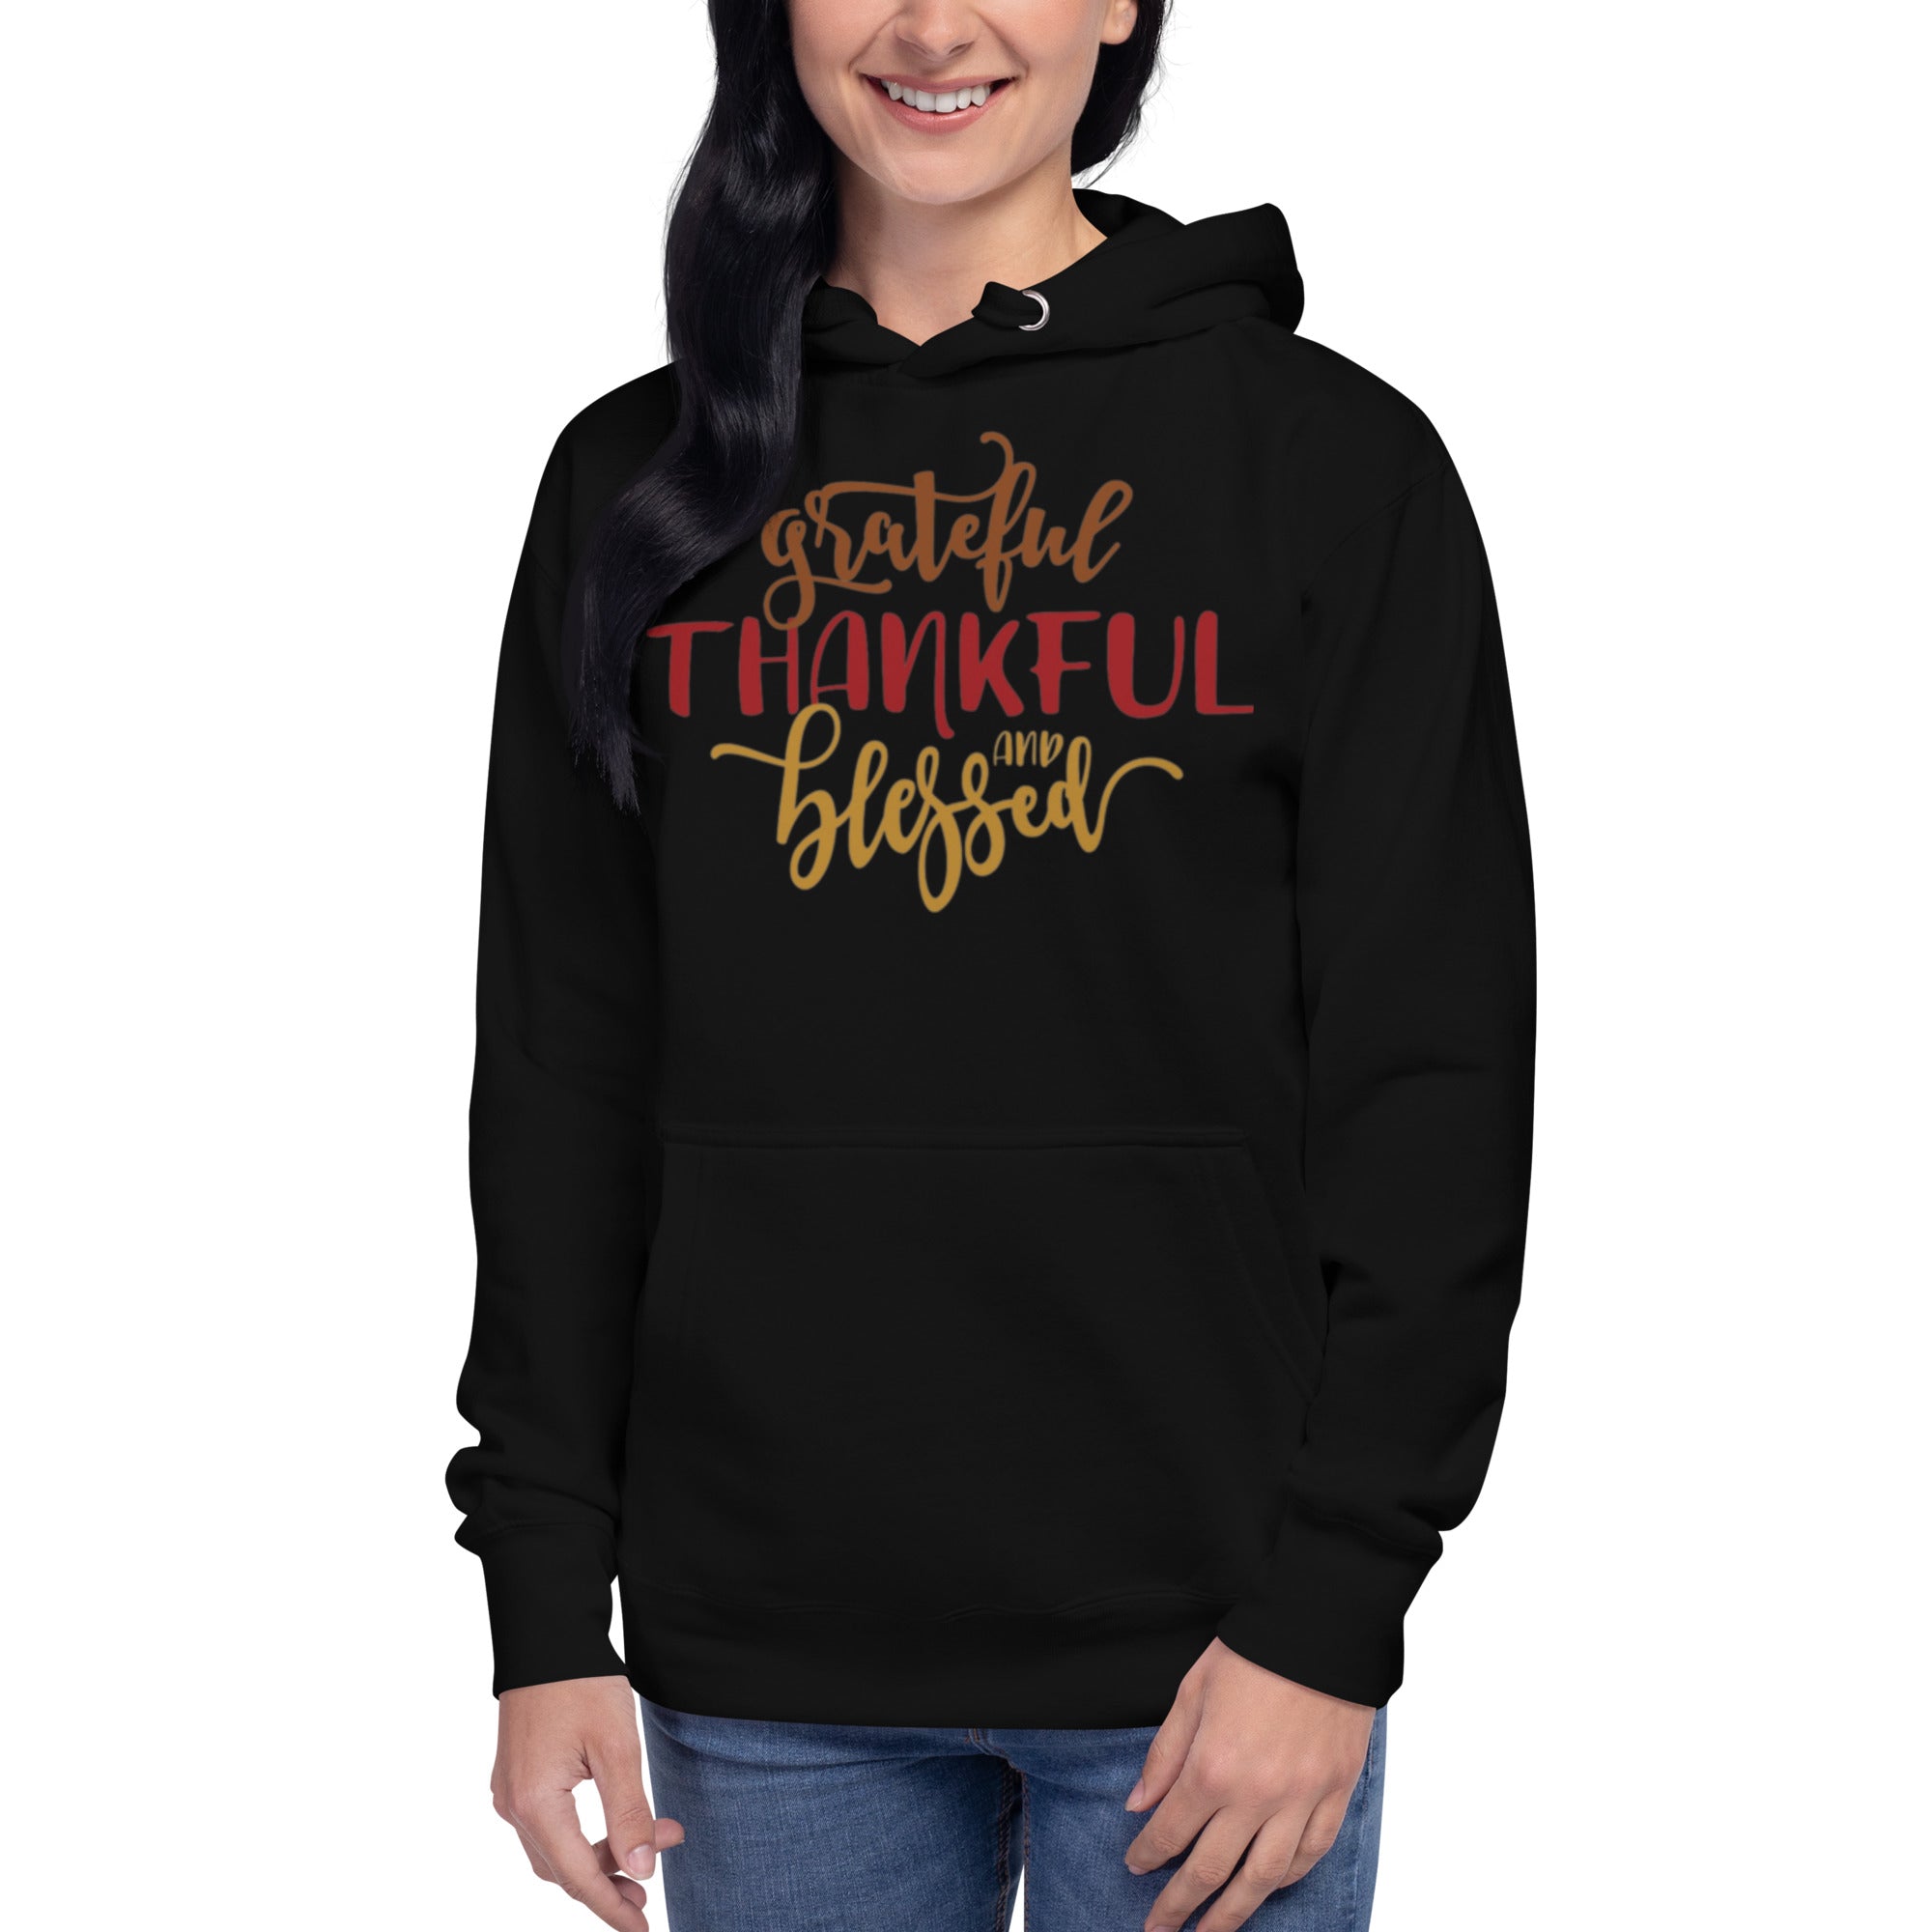 Buy Grateful Thankful Blessed Hoodie | DIANES DELIGHT FUL PRINTS